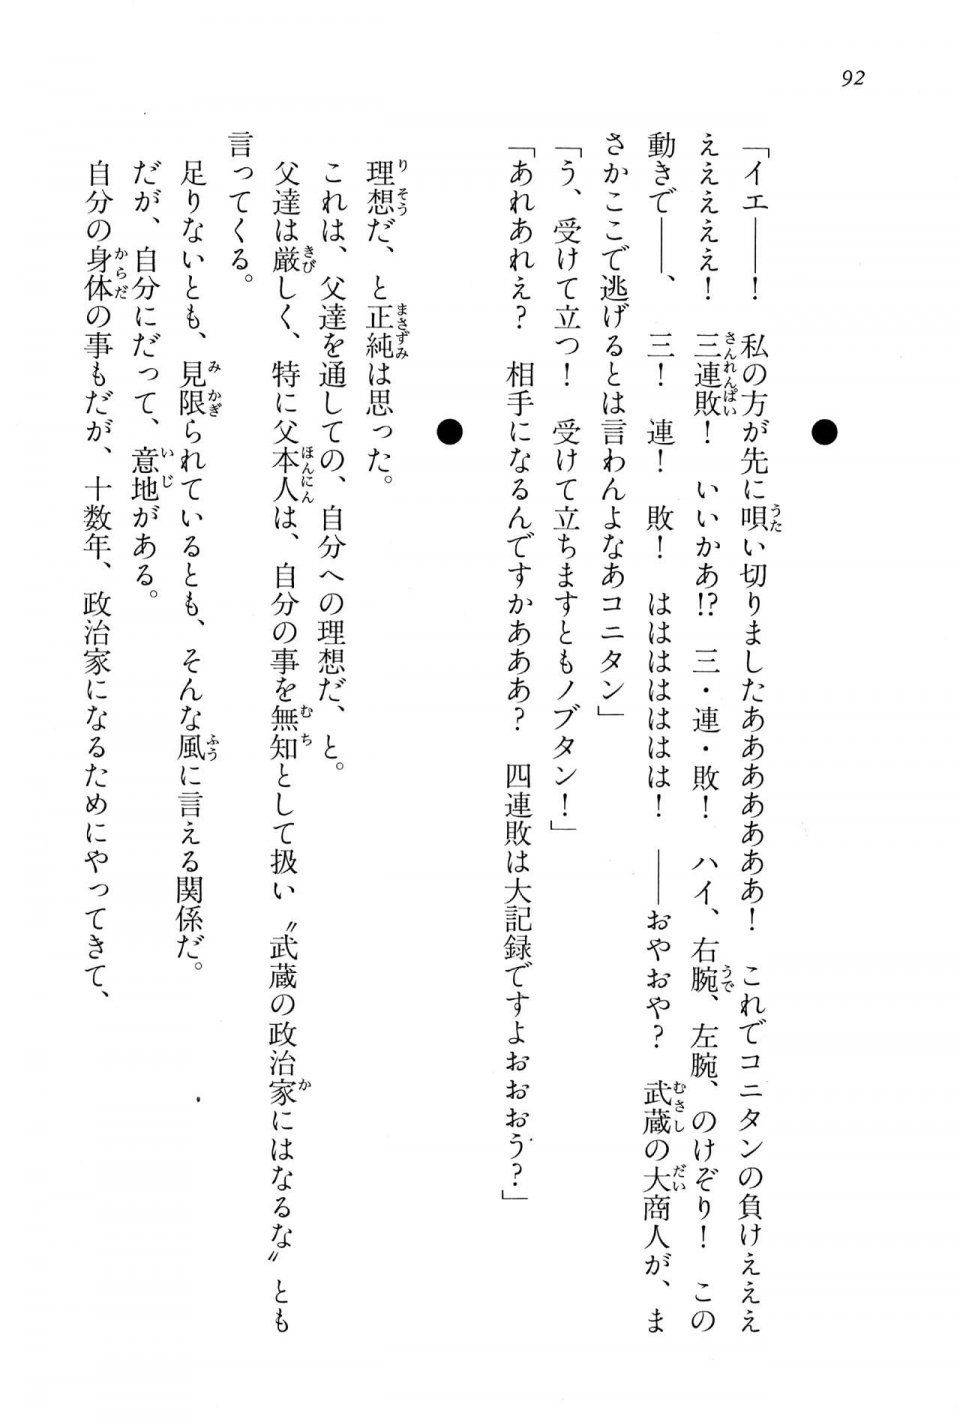 Kyoukai Senjou no Horizon BD Special Mininovel Vol 6(3B) - Photo #96